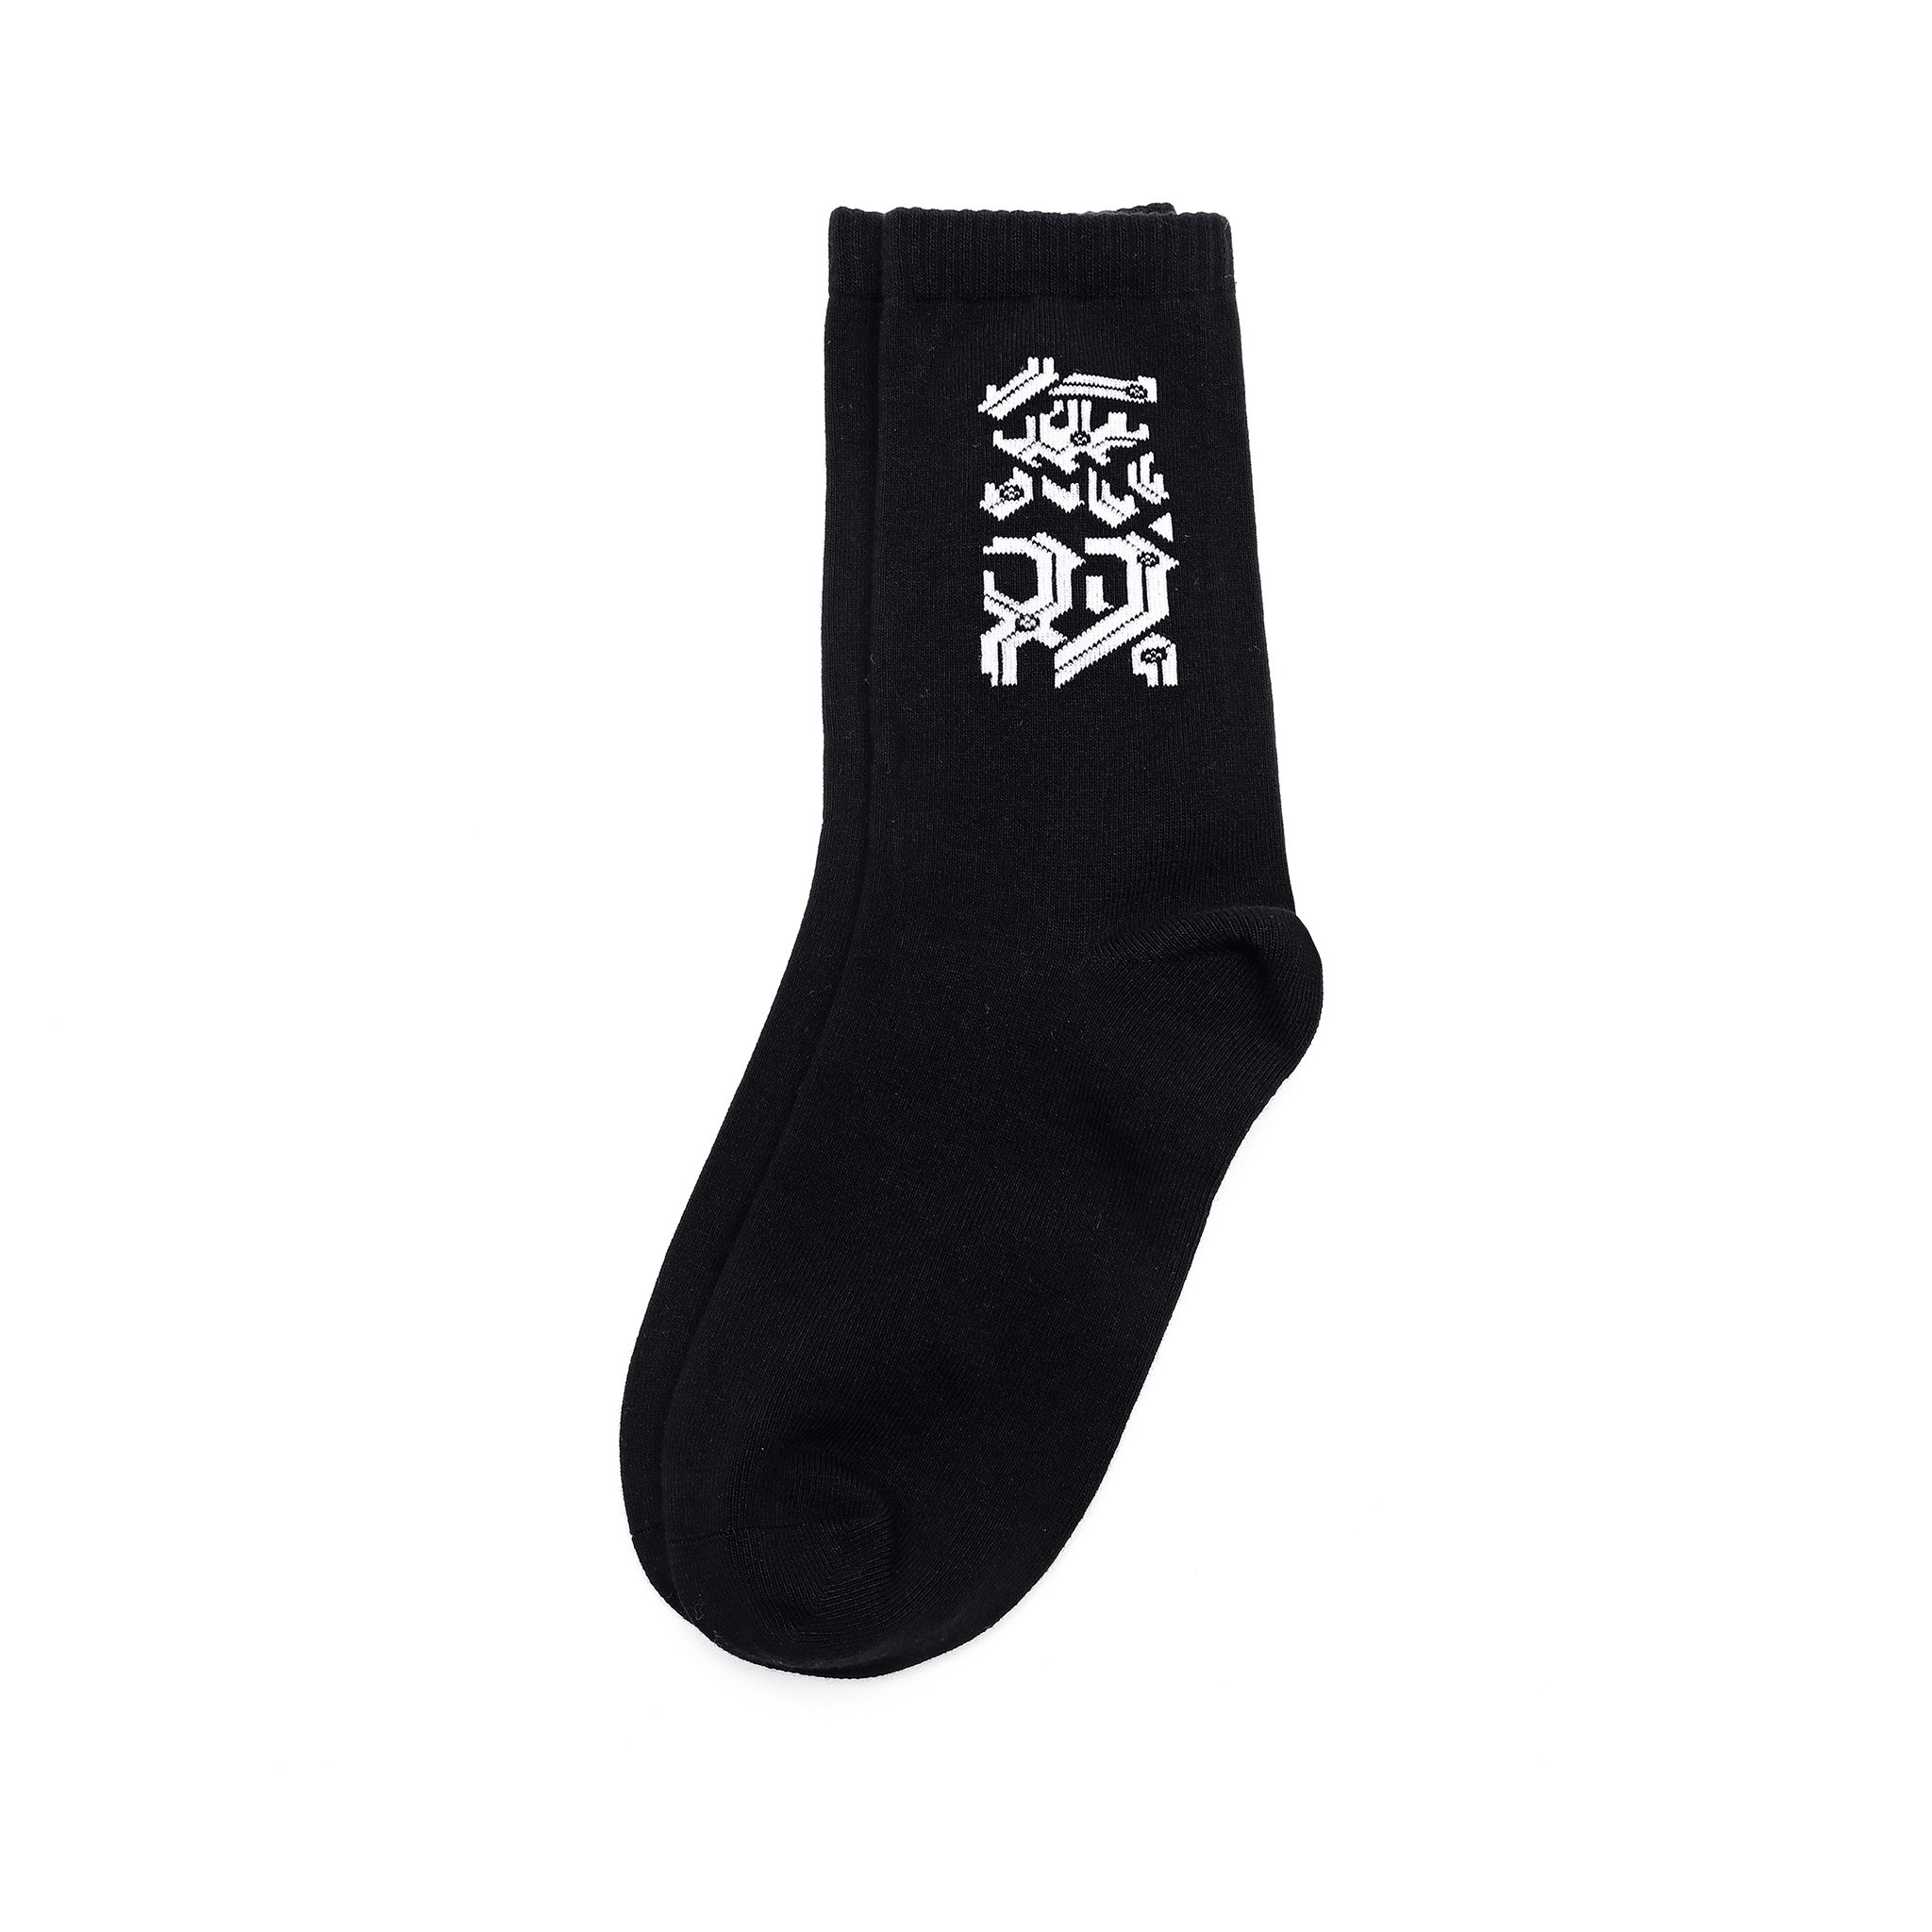 Spor Çorap - Siyah image